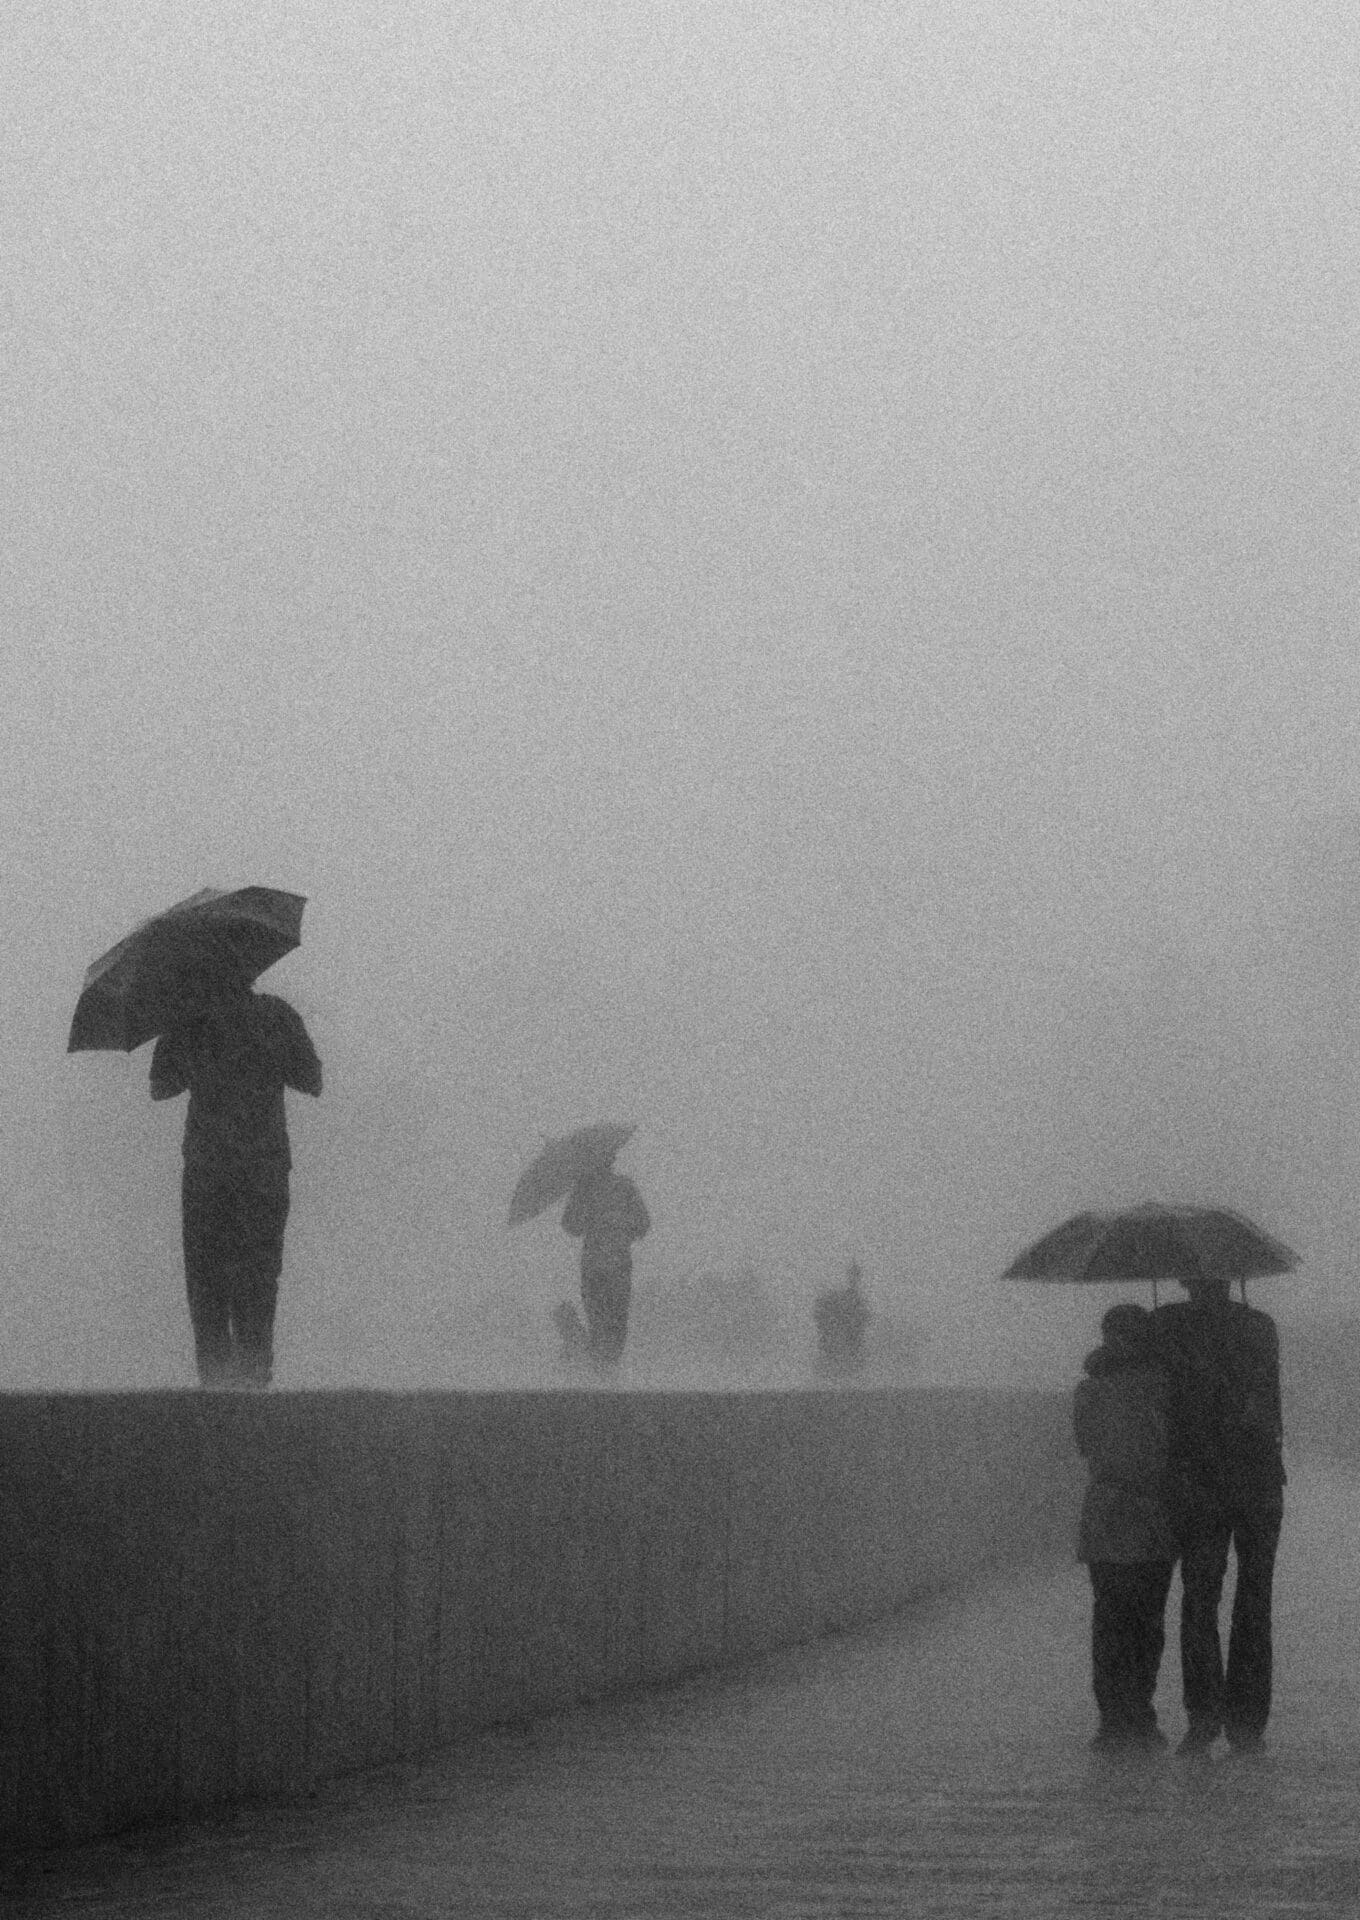 Photographer Sunhil Sippy on Mumbai | Figures holding umbrellas walk through the mist